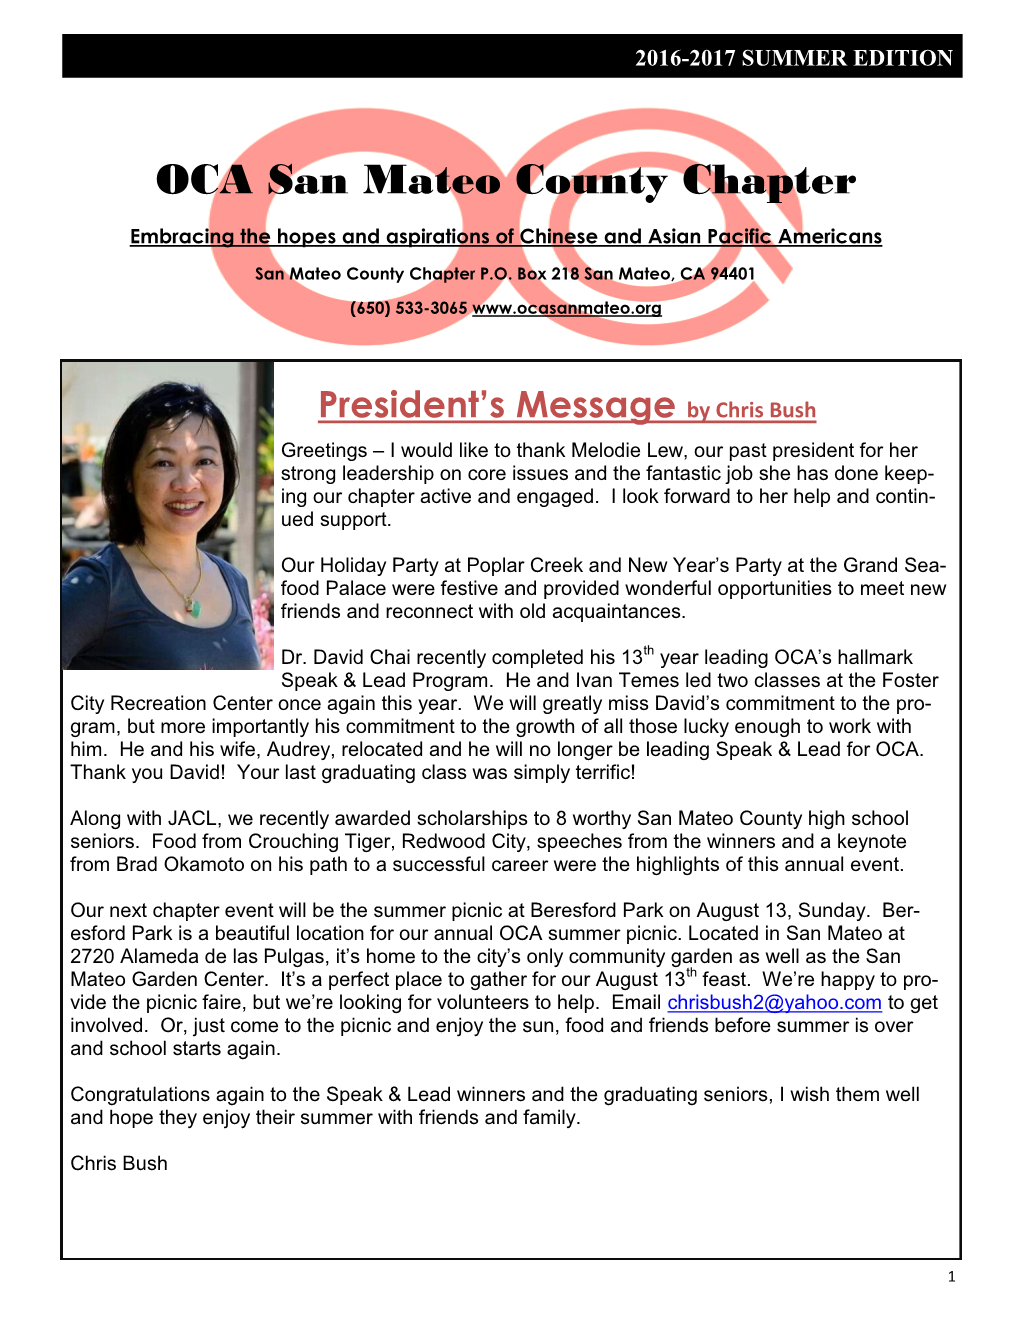 OCA San Mateo County Chapter